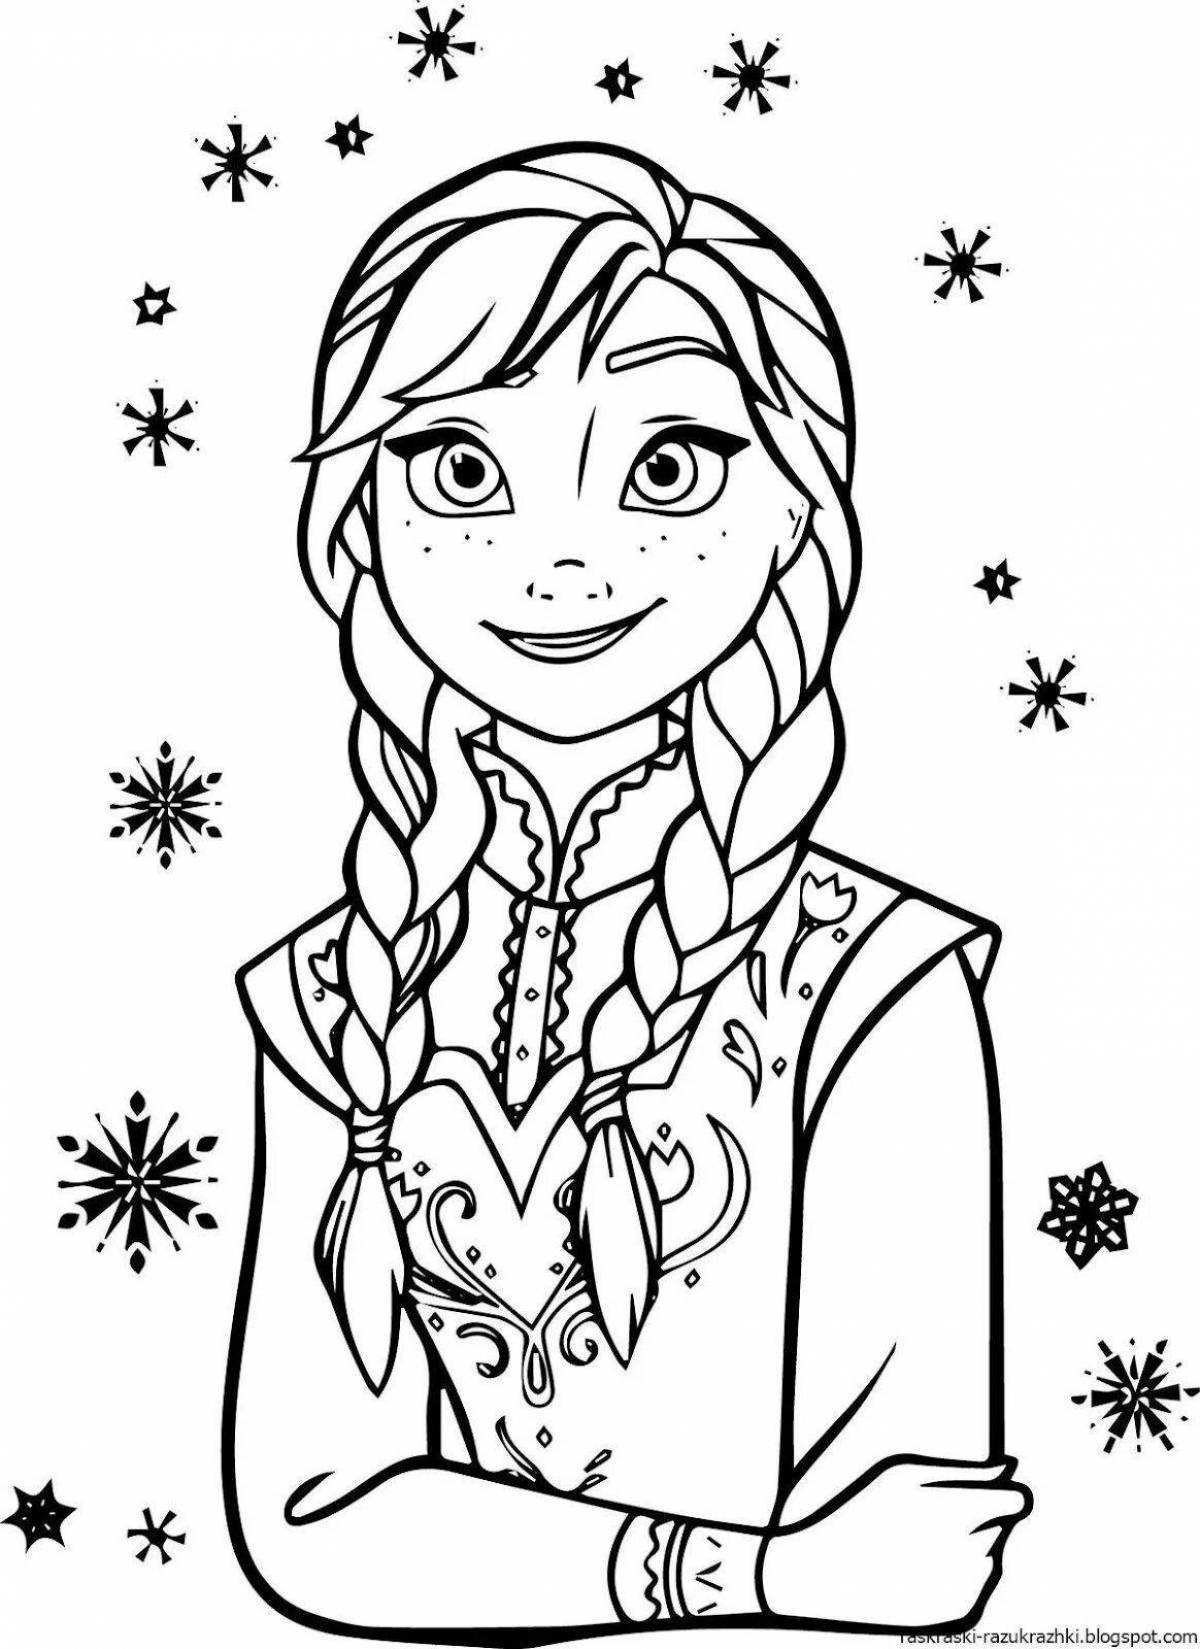 Elsa and anna joyful coloring